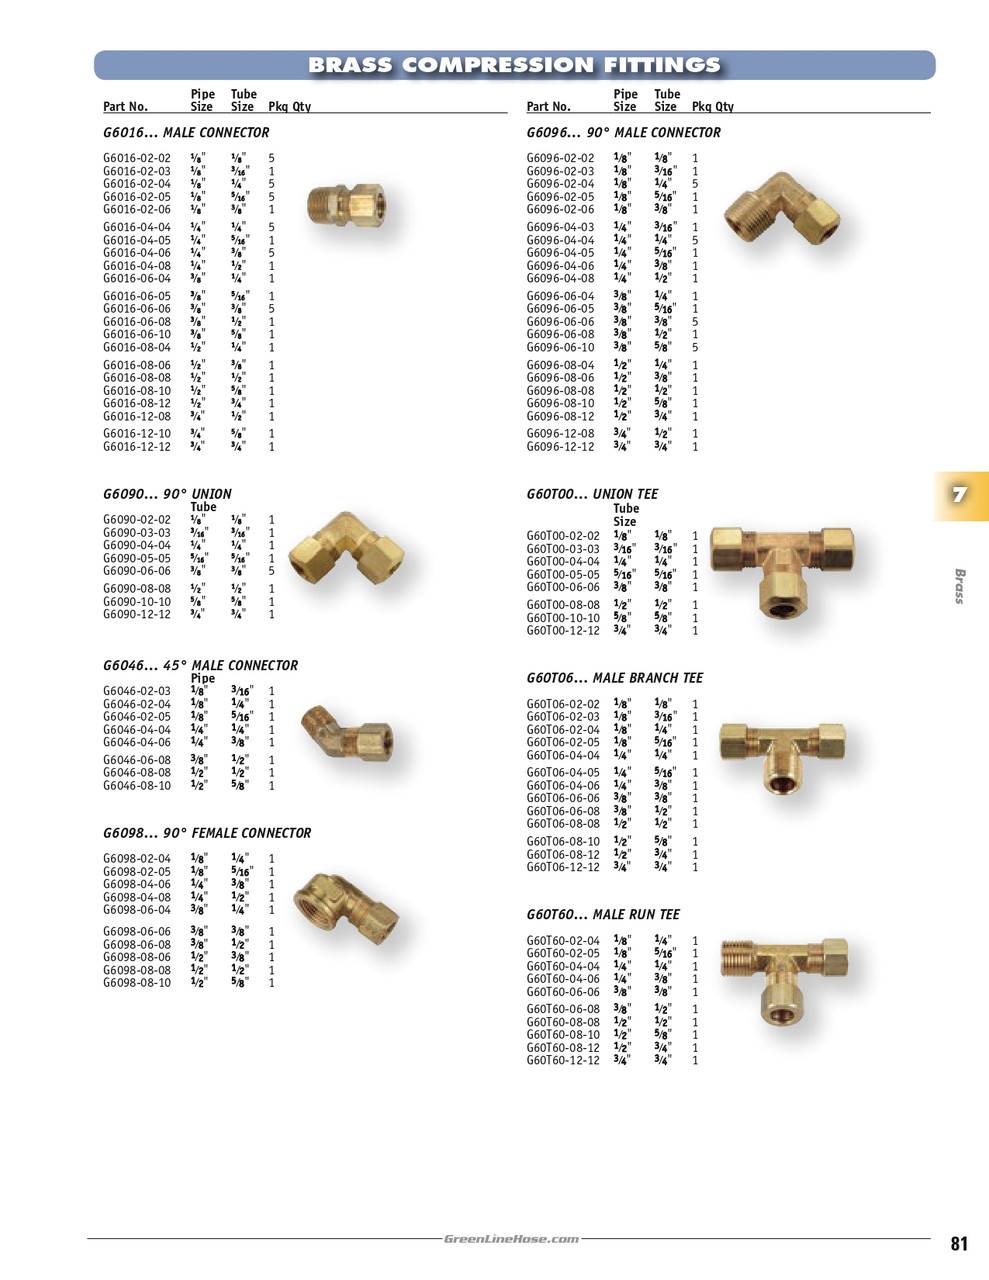 1/4 x 3/8 x 3/8" Brass Male NPT - Compression - Compression Tee   G60T06-04-06